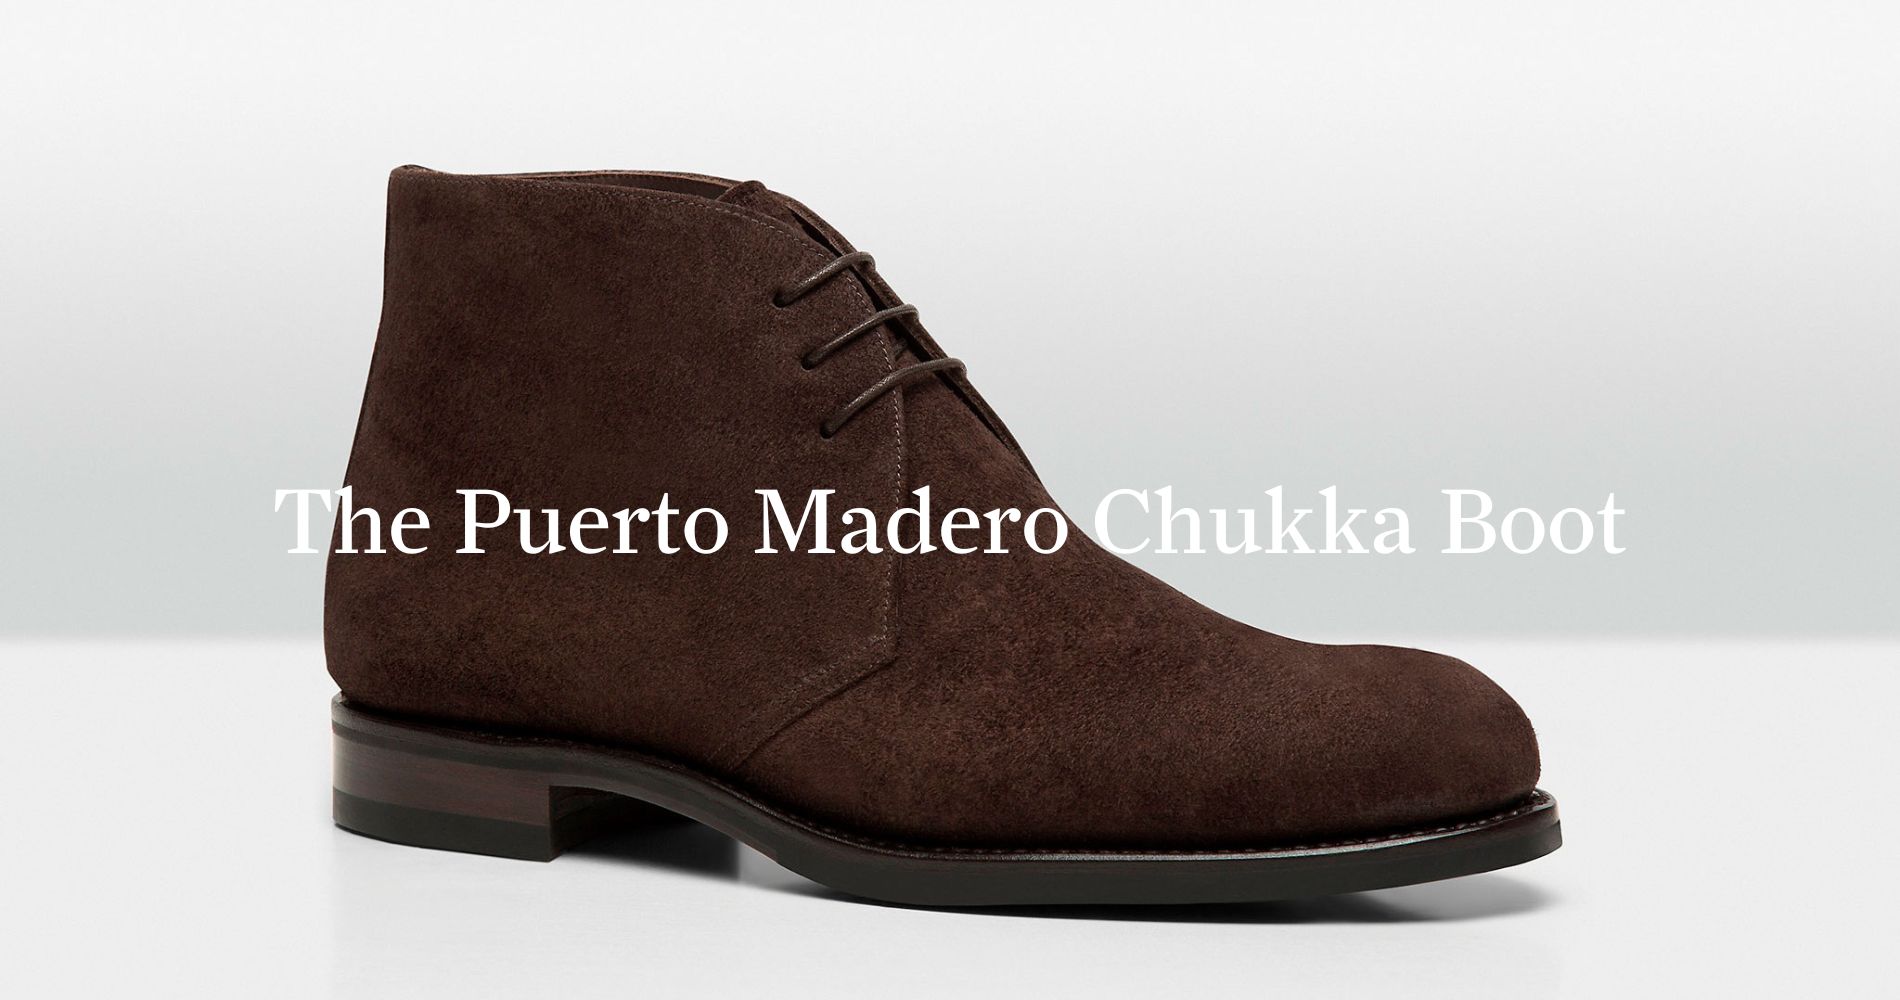 The Puerto Madero Chukka Boot